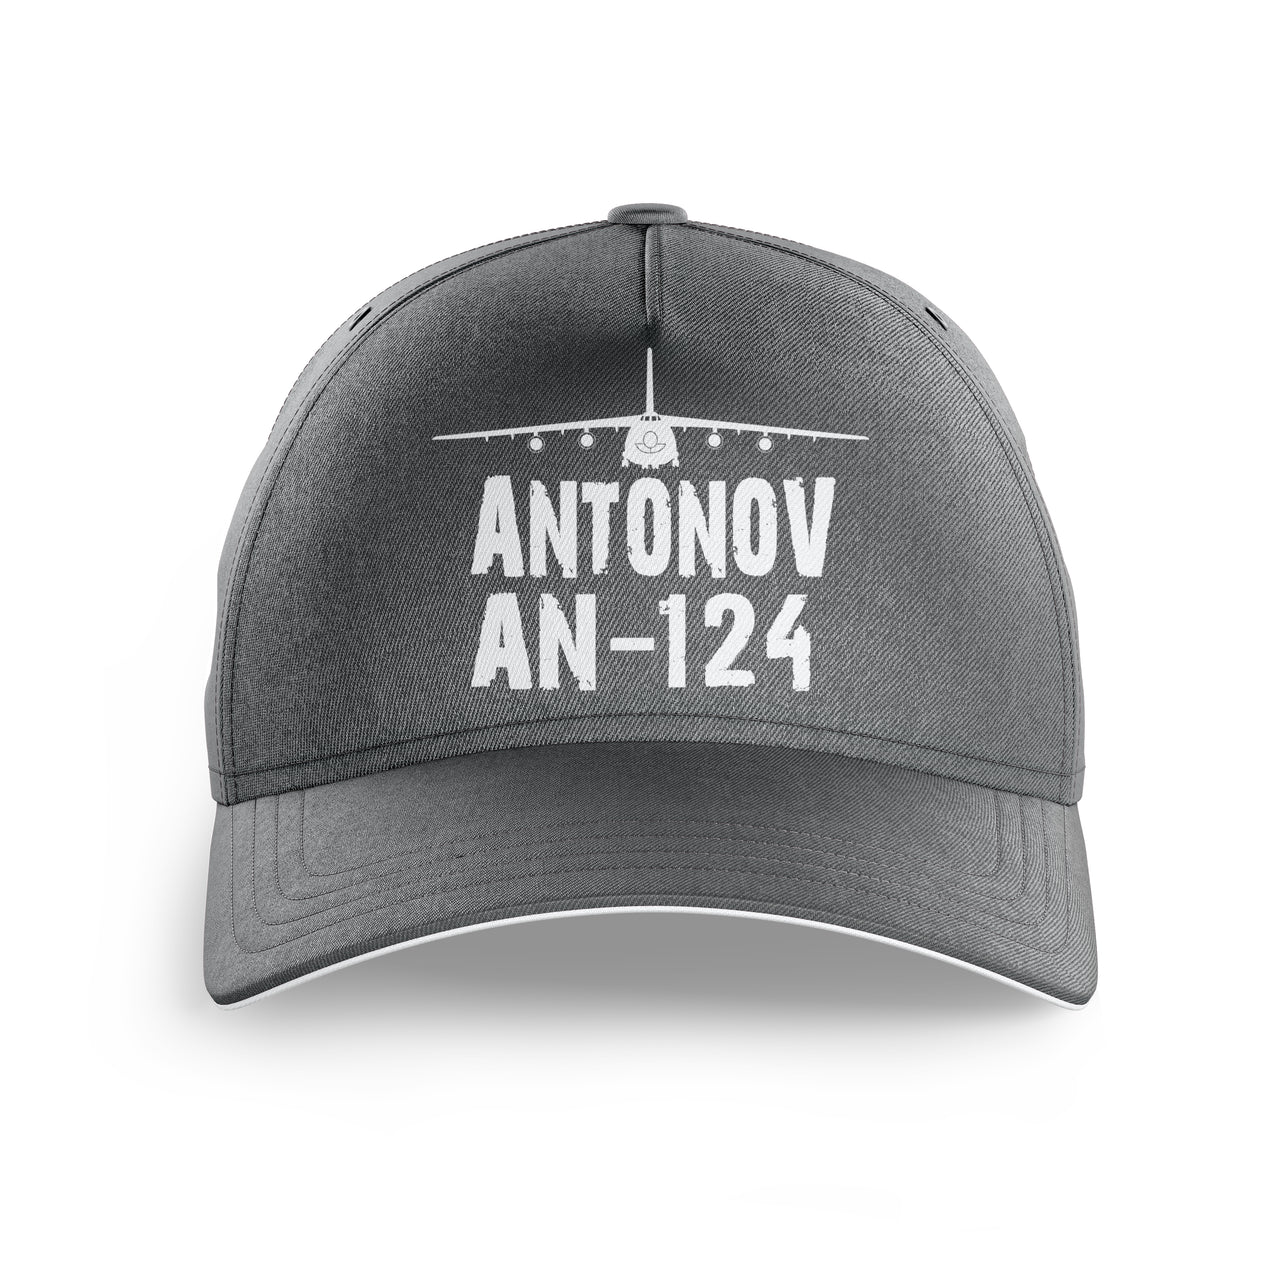 Antonov AN-124 & Plane Printed Hats